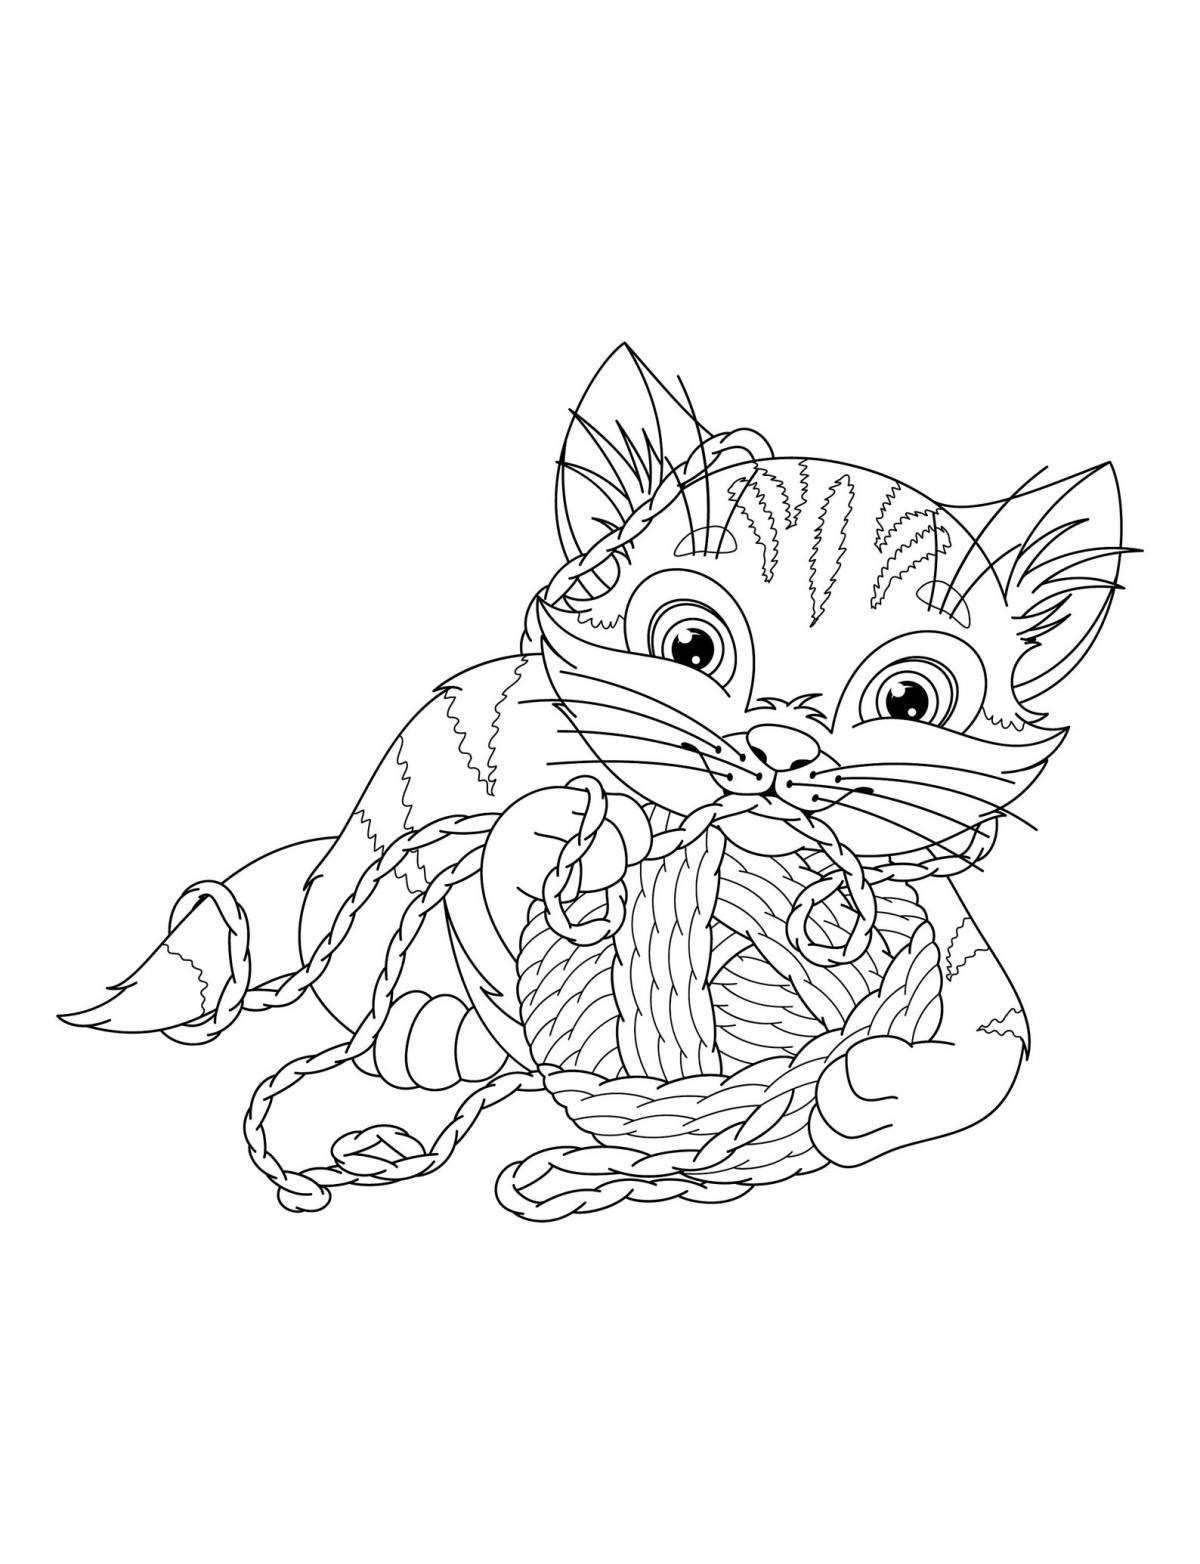 Magic kitten coloring merch